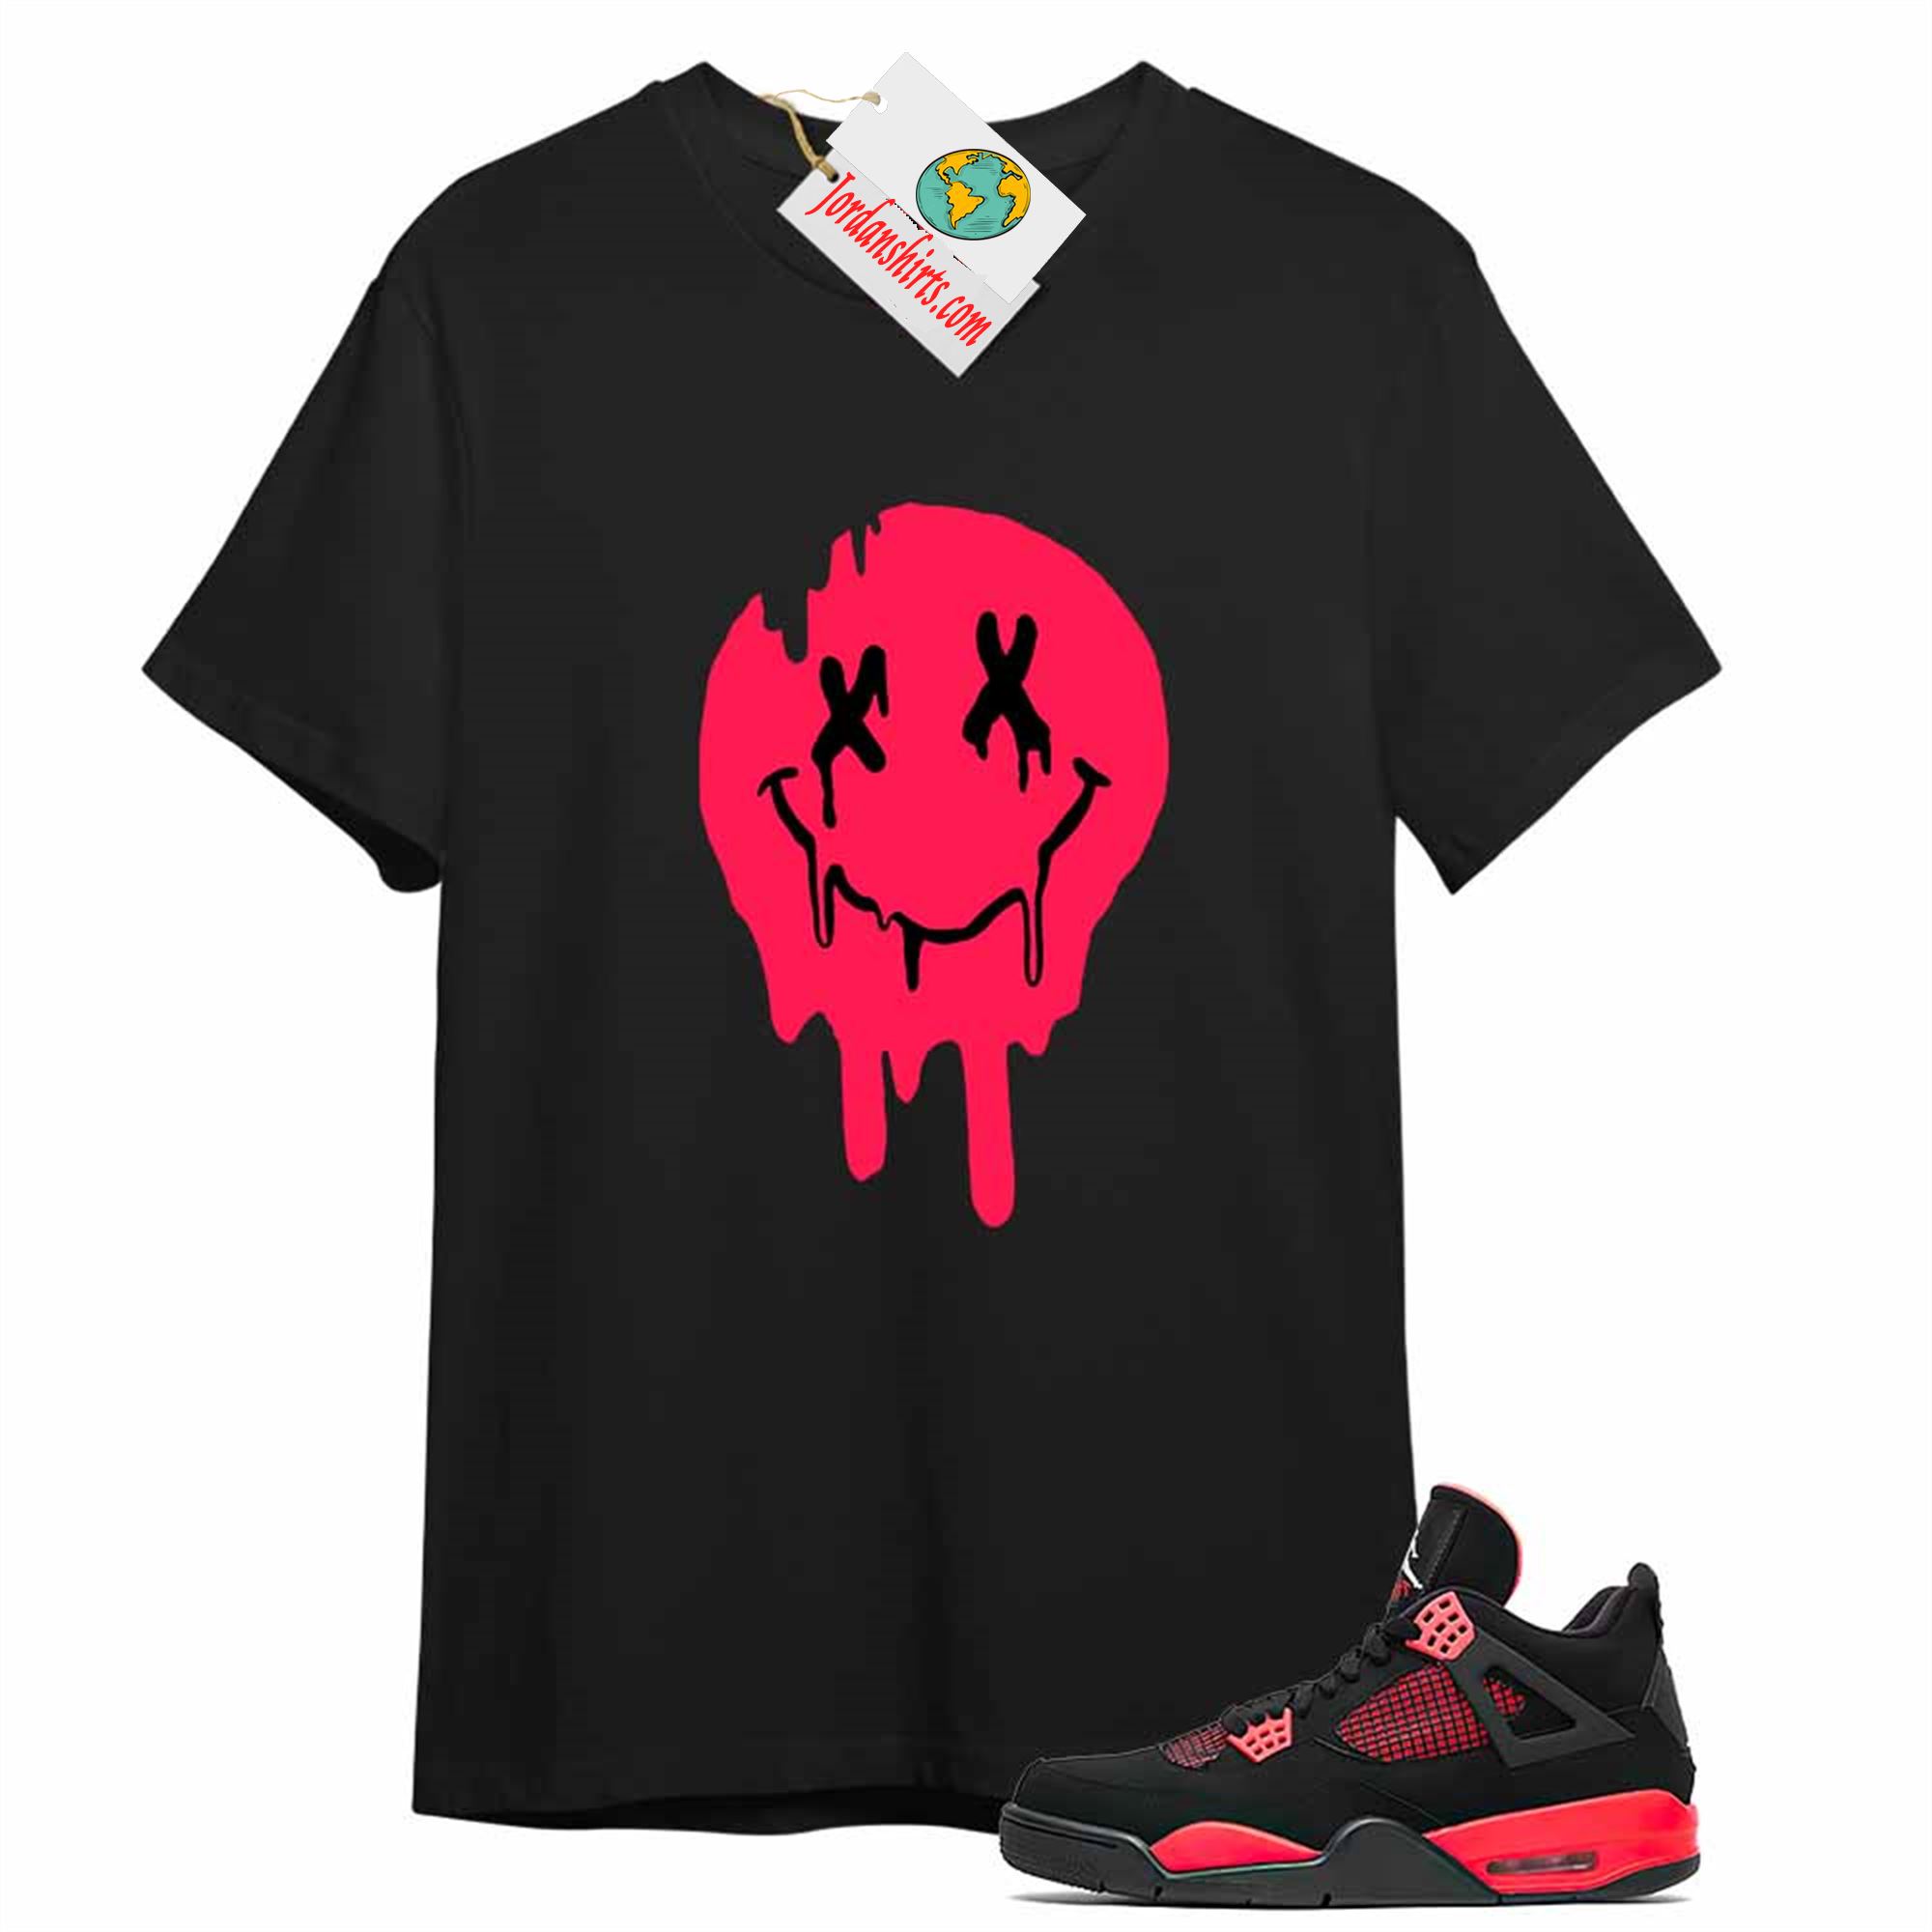 Jordan 4 Shirt, Happy Face Dripping Black T-shirt Air Jordan 4 Red Thunder 4s Plus Size Up To 5xl